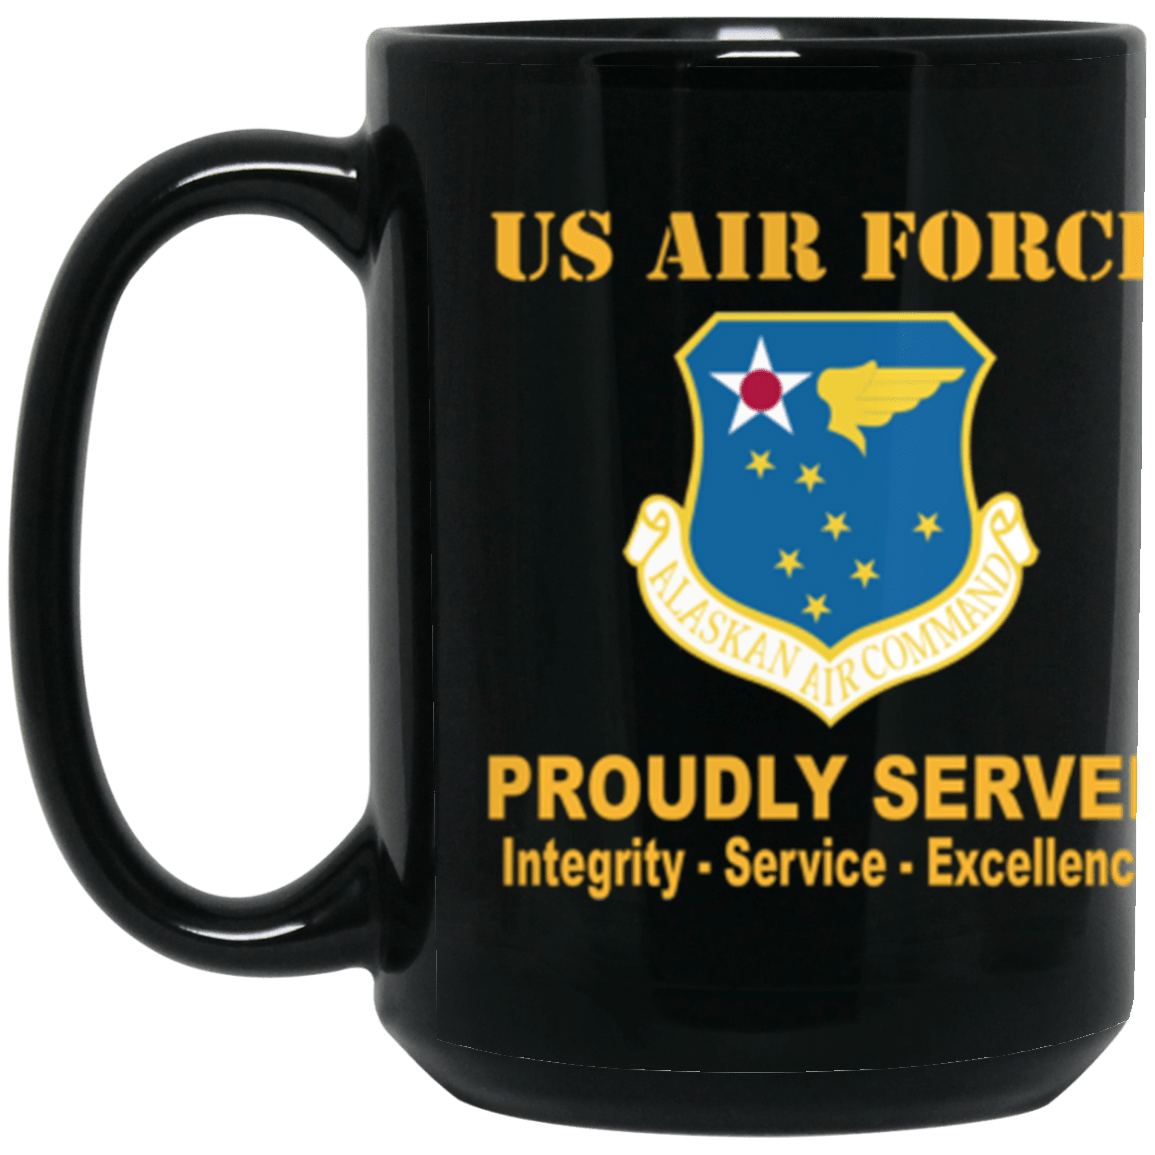 US Air Force Alaskan Air Command Proudly Served Core Values 15 oz. Black Mug-Drinkware-Veterans Nation